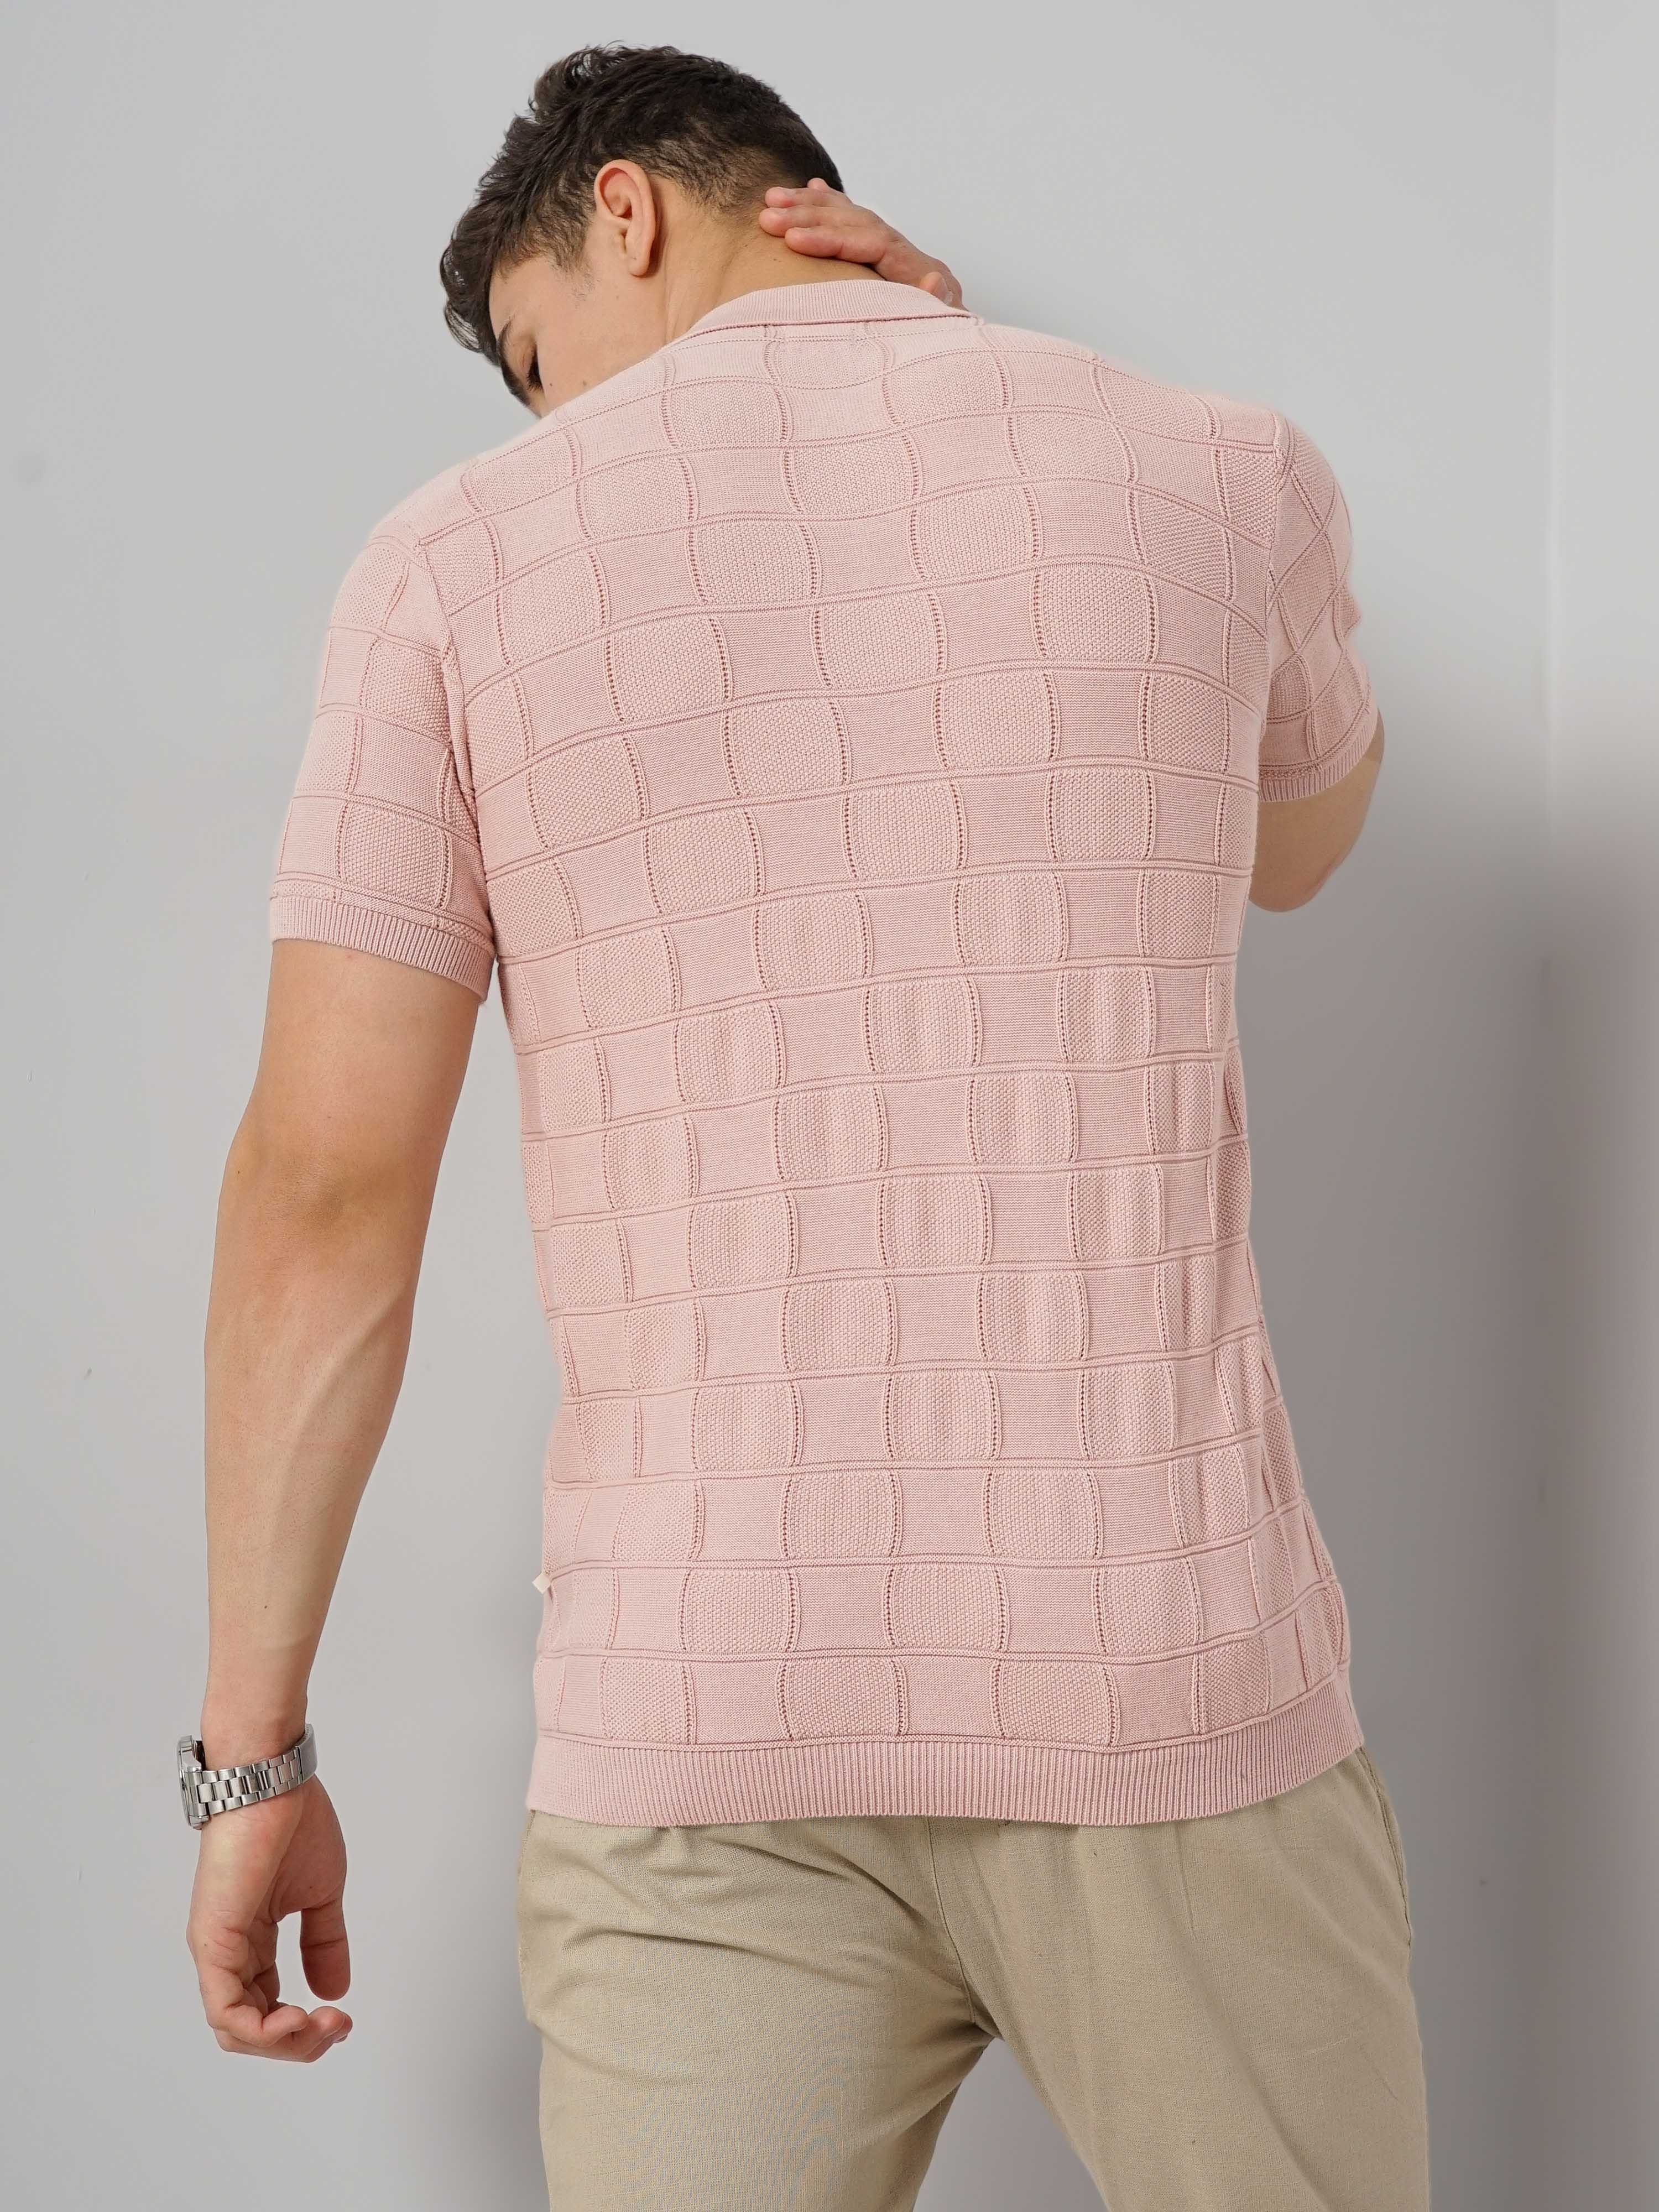 Celio Men's textured T-shirts